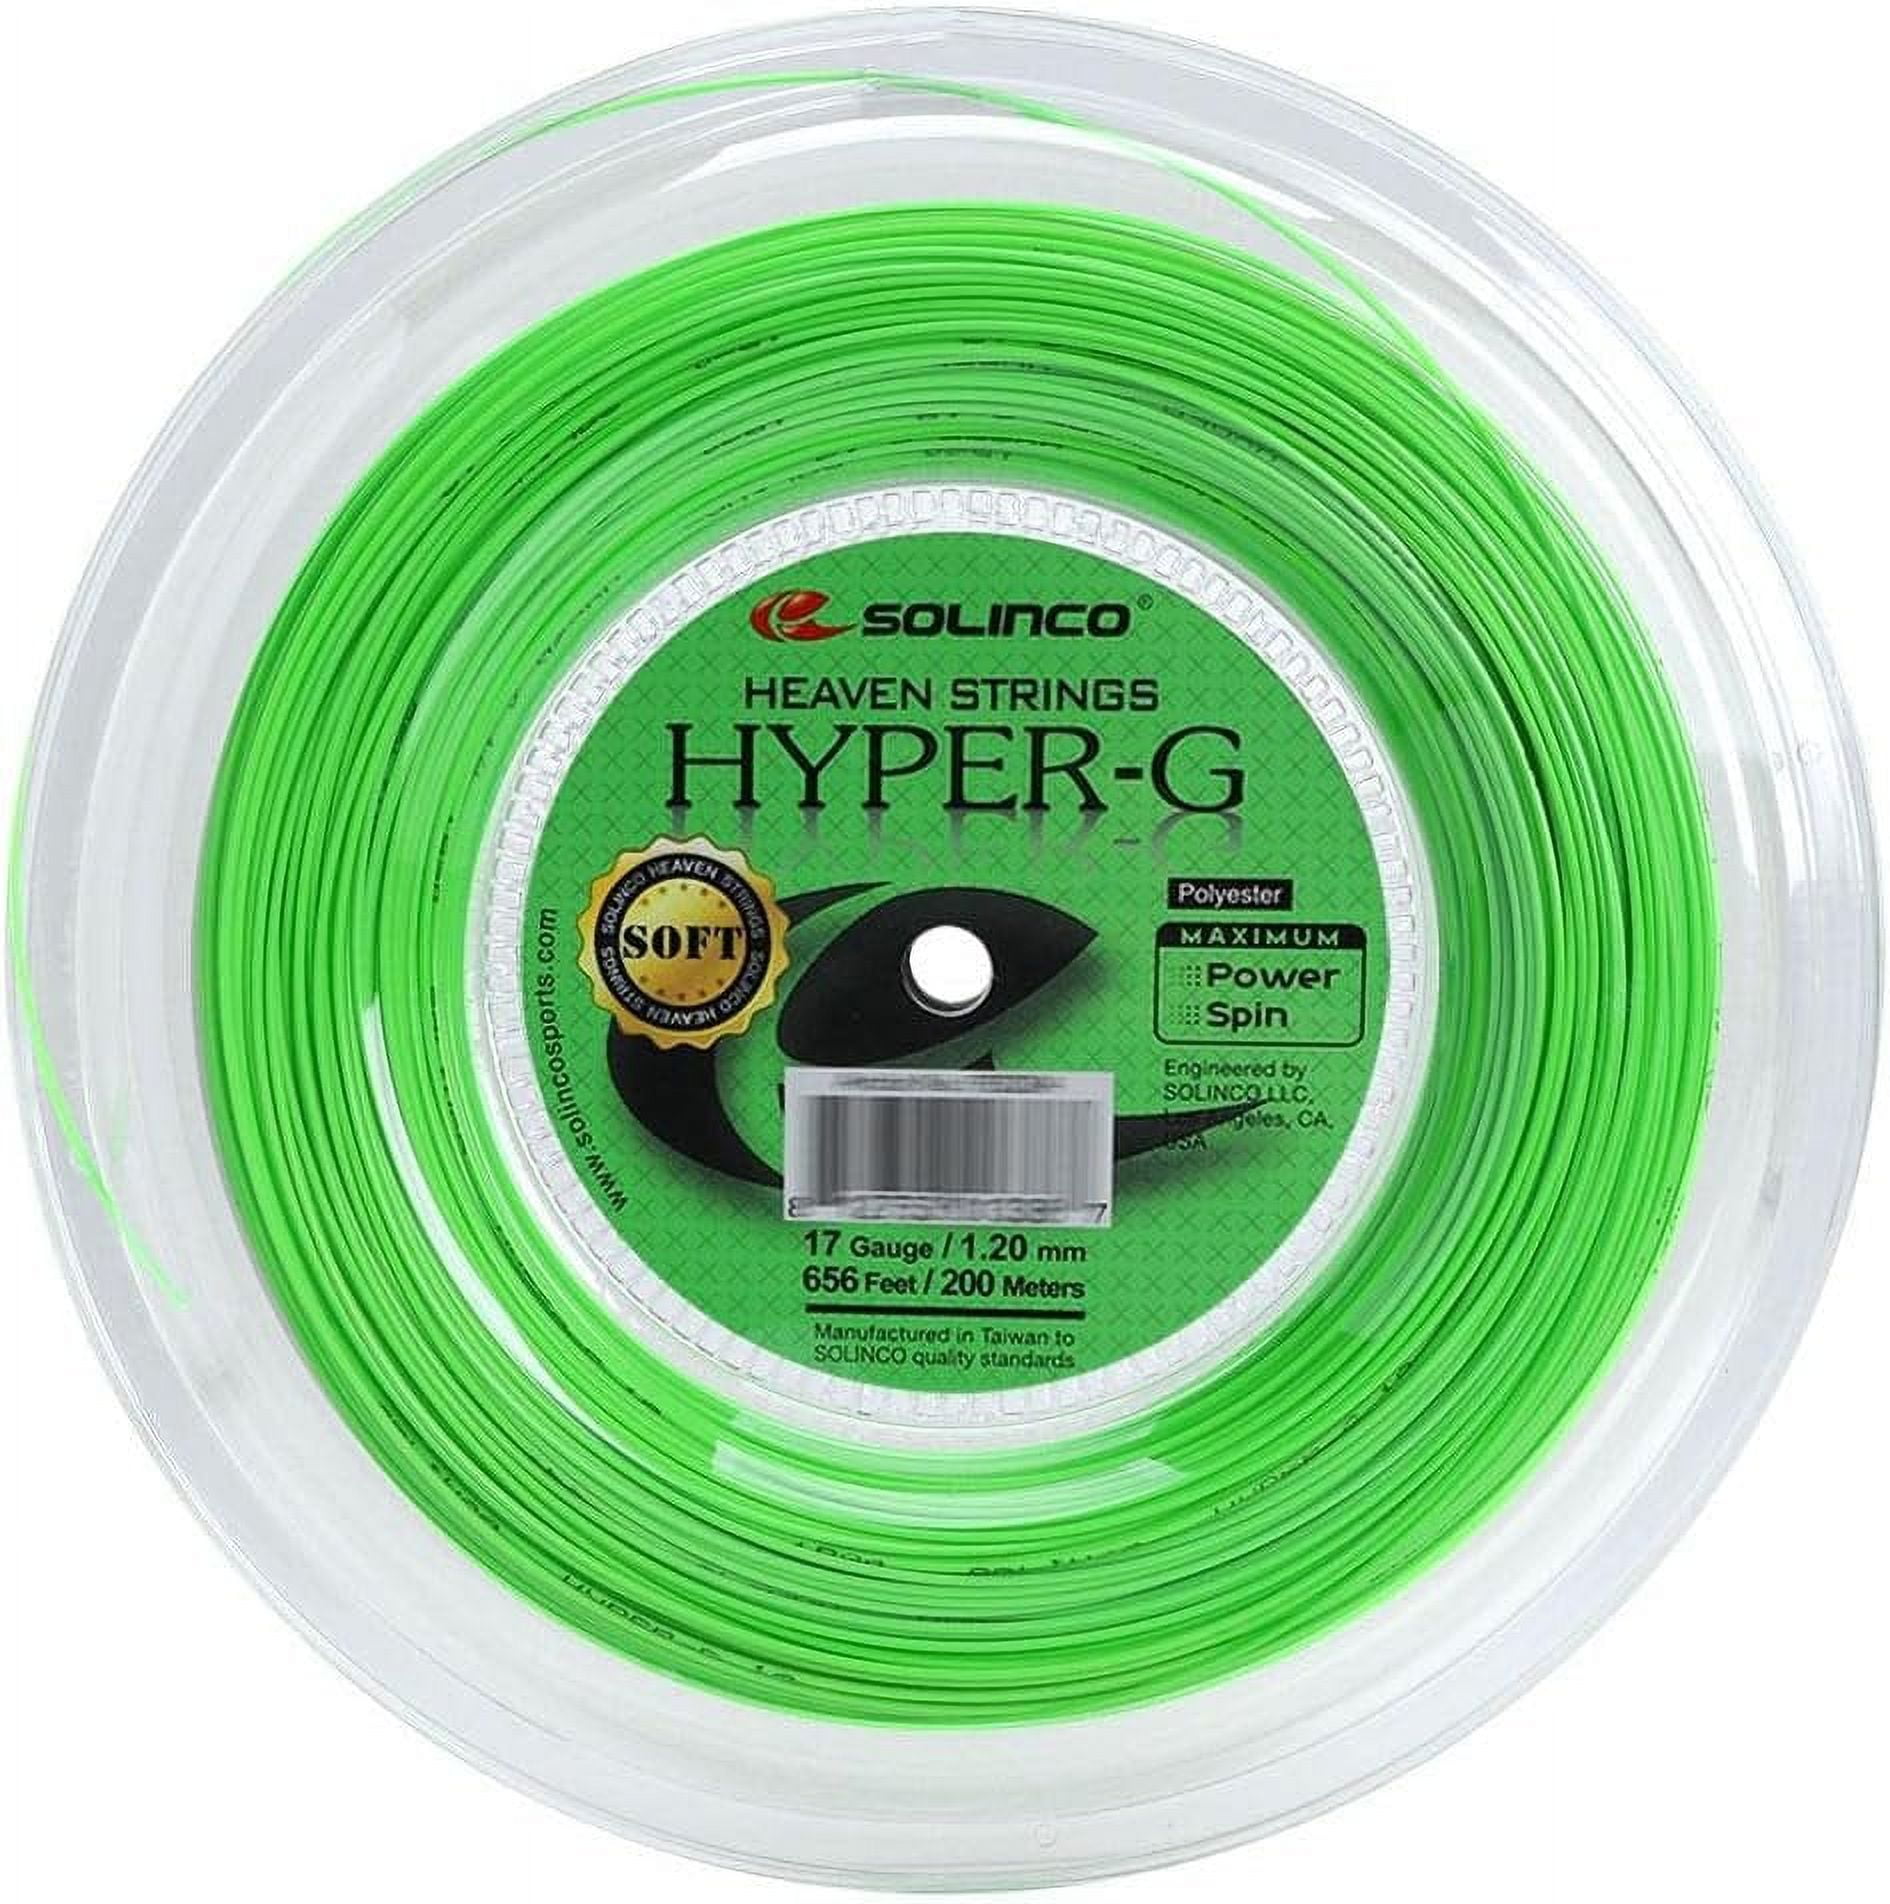 Solinco Hyper-G Soft Tennis String Reel ( 17 ) 